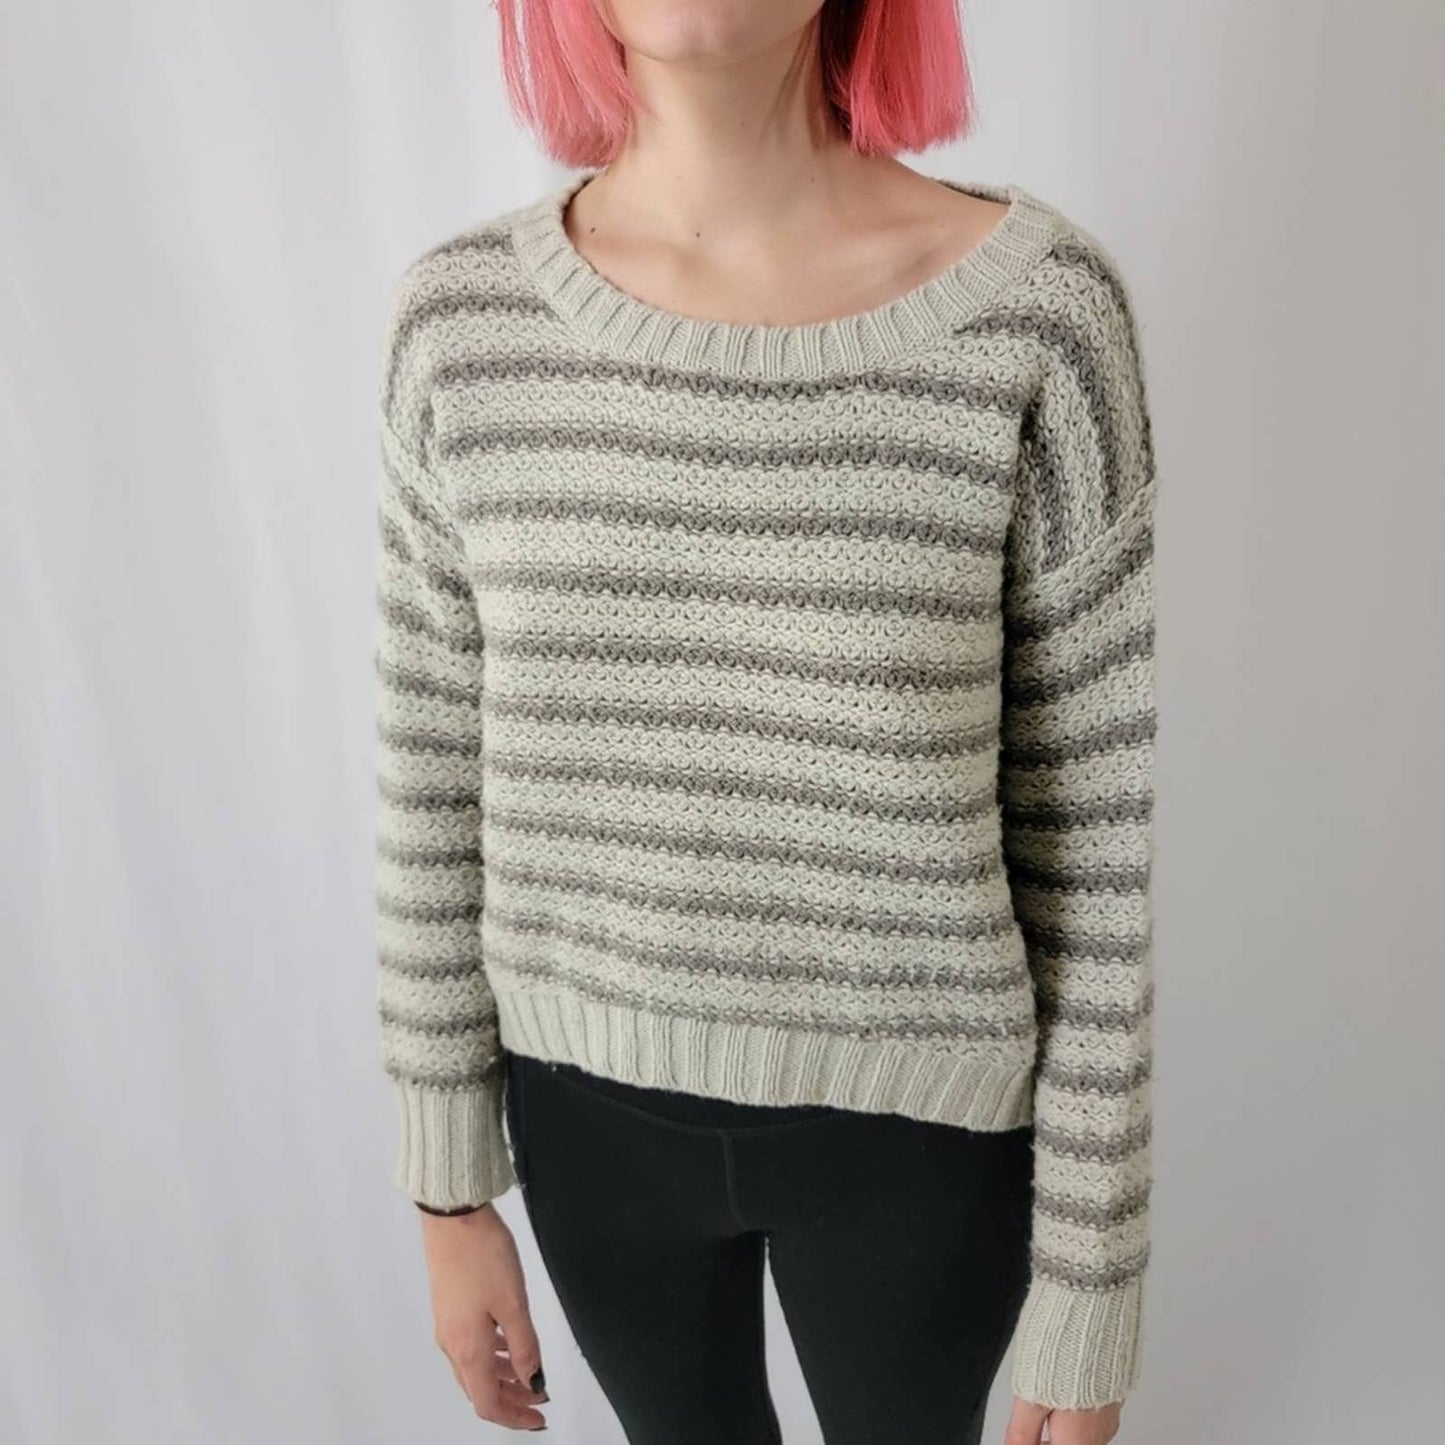 Kensie Cream Knit Striped Sweater - S